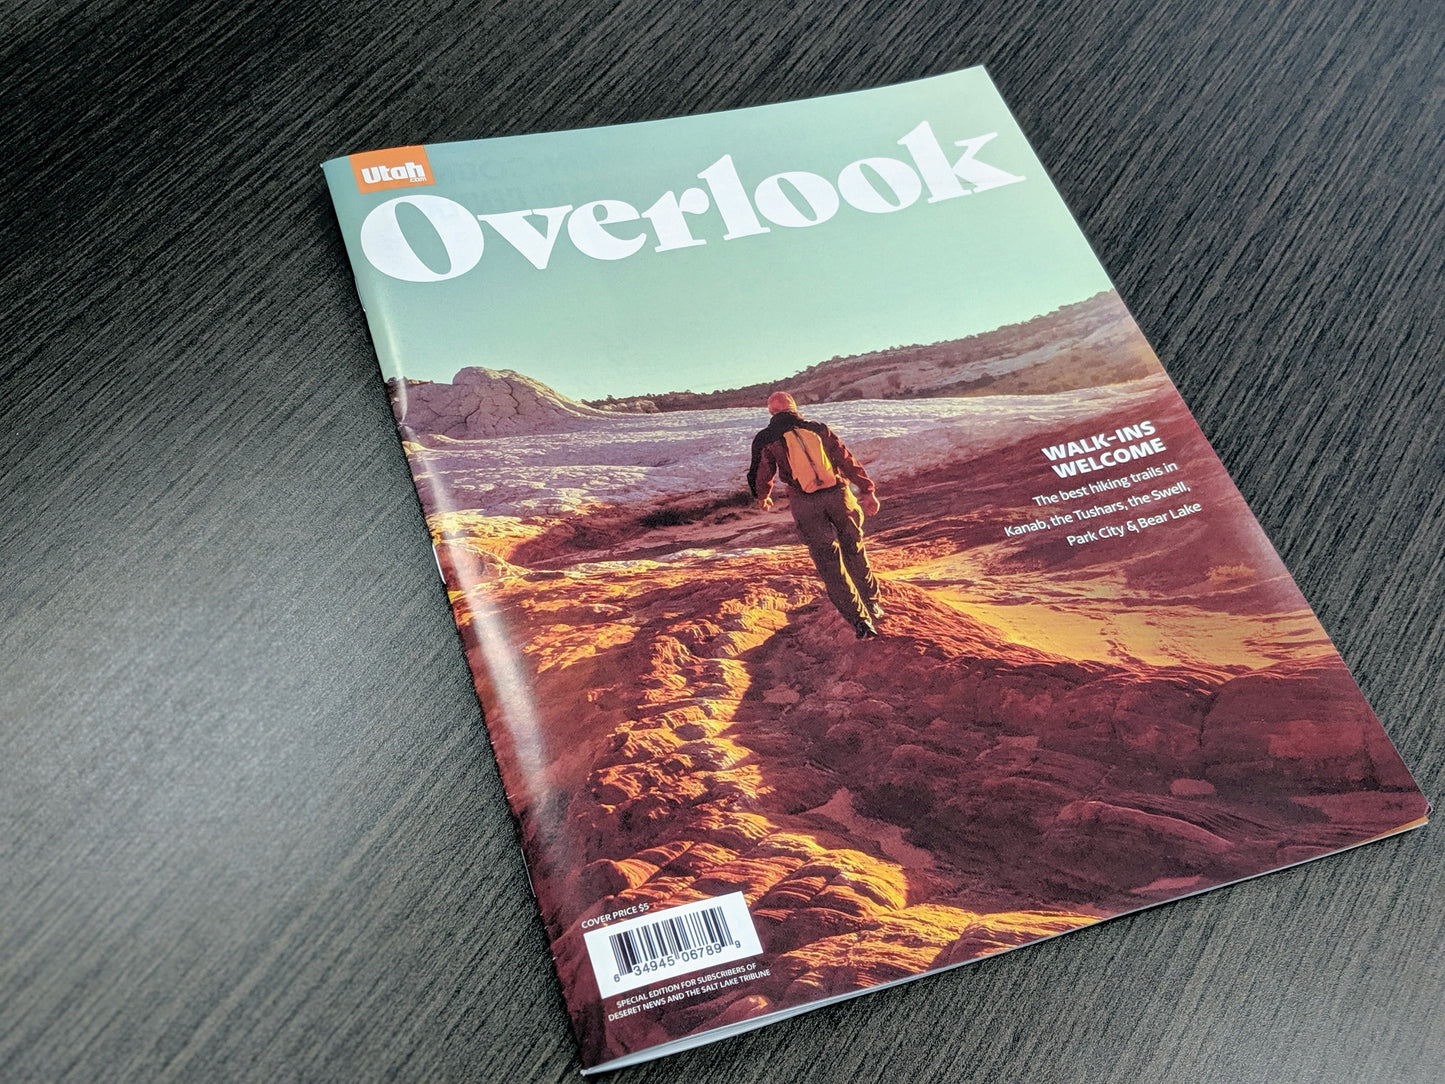 OVERLOOK – The Magazine | Utah.com Merchandise